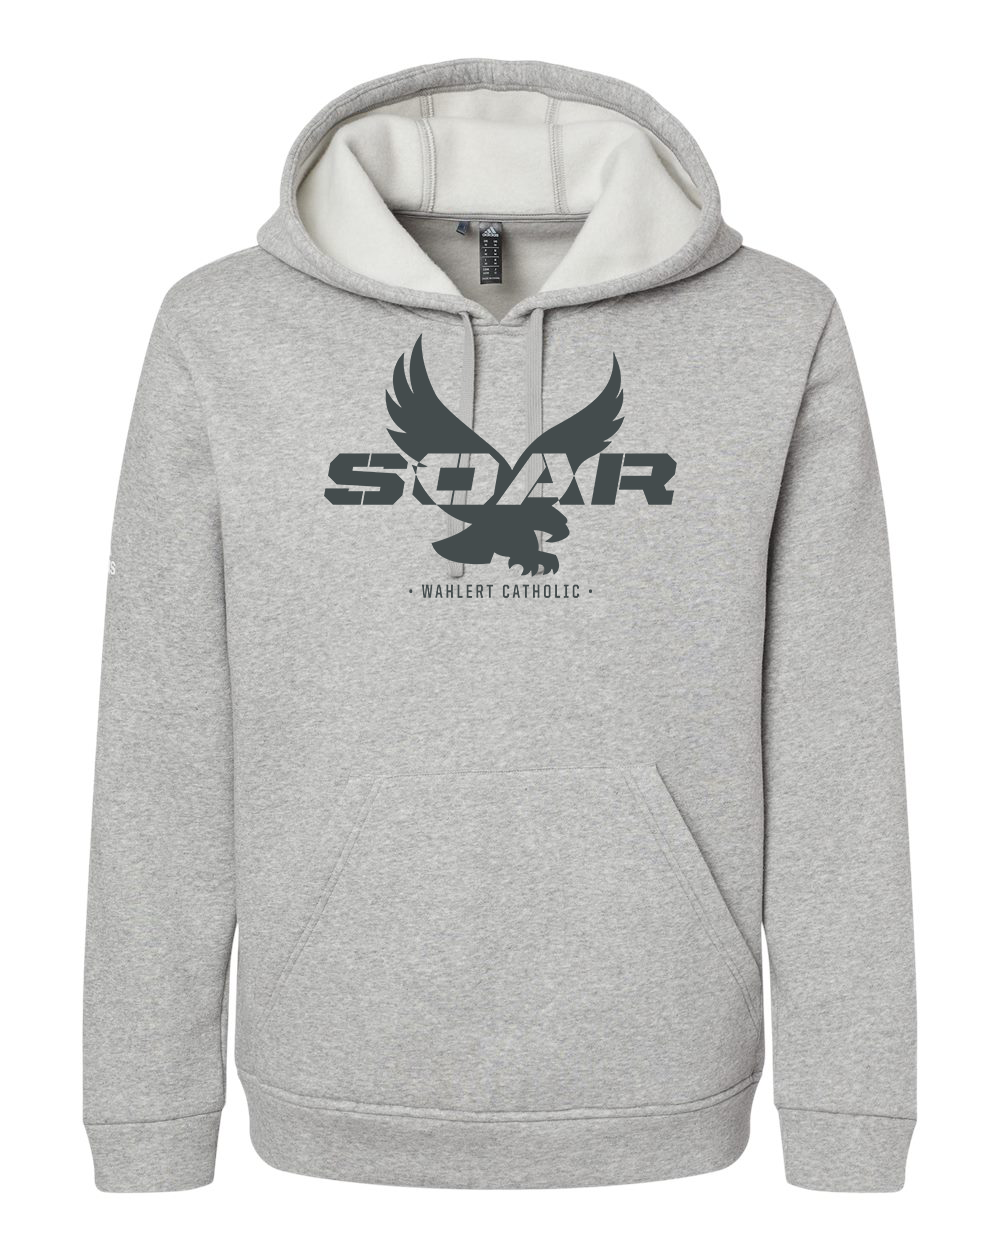 A432 - SOAR SPIRIT -  Adult Adidas Fleece Hooded Sweatshirt